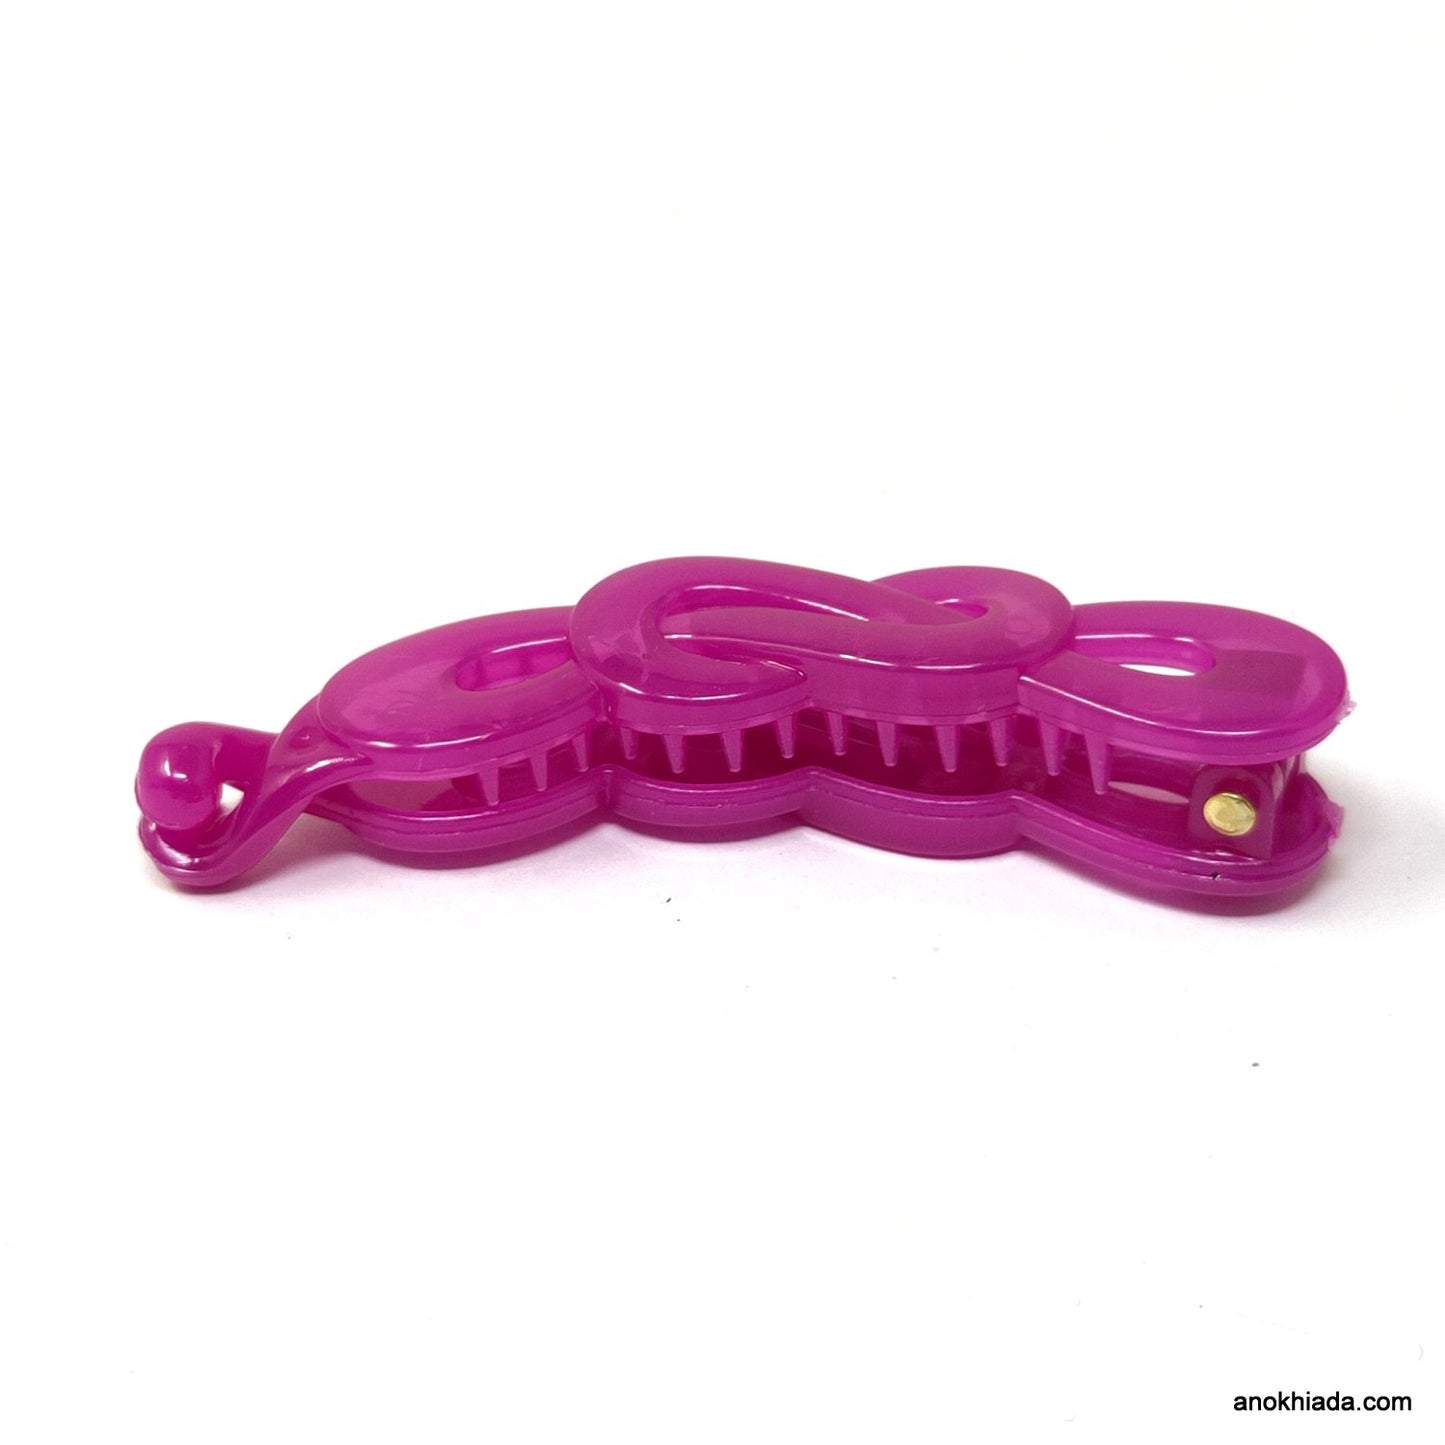 Translucent Infinity Design Small Purple Banana Hair Clip for Girls & Woman (98-14K Banana Hair Clips)